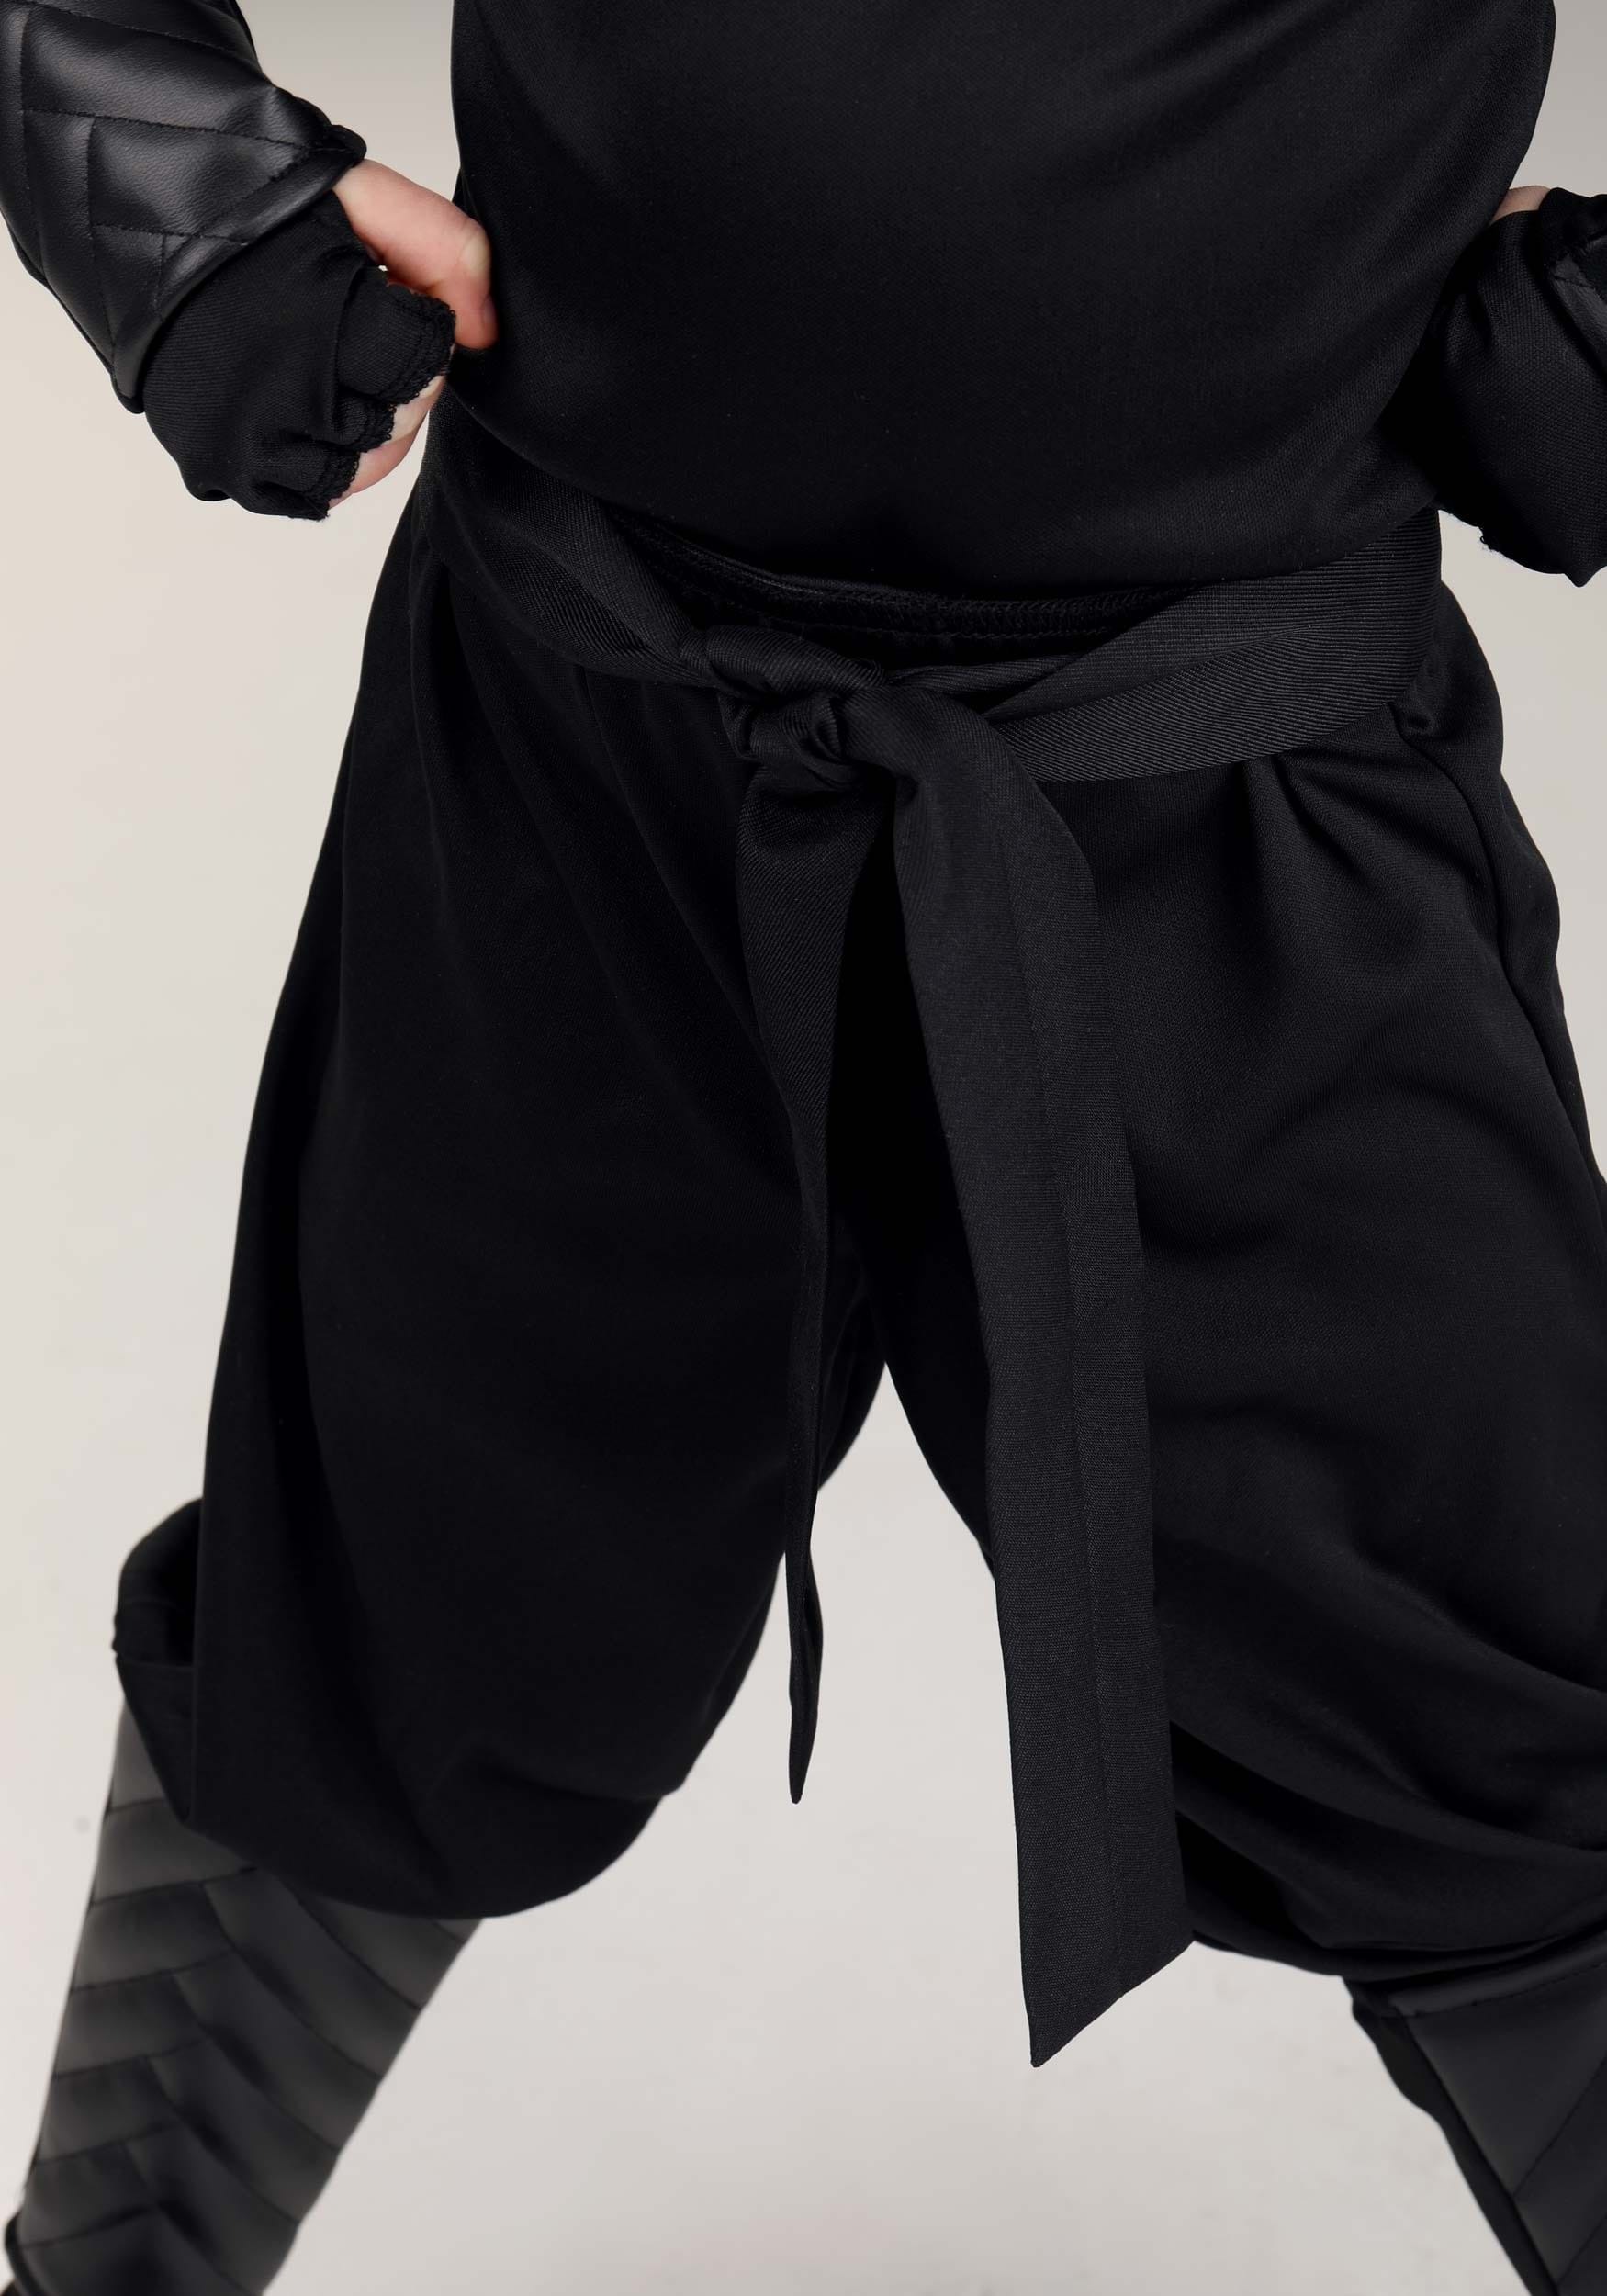 Stealth Shinobi Toddler Ninja Costume